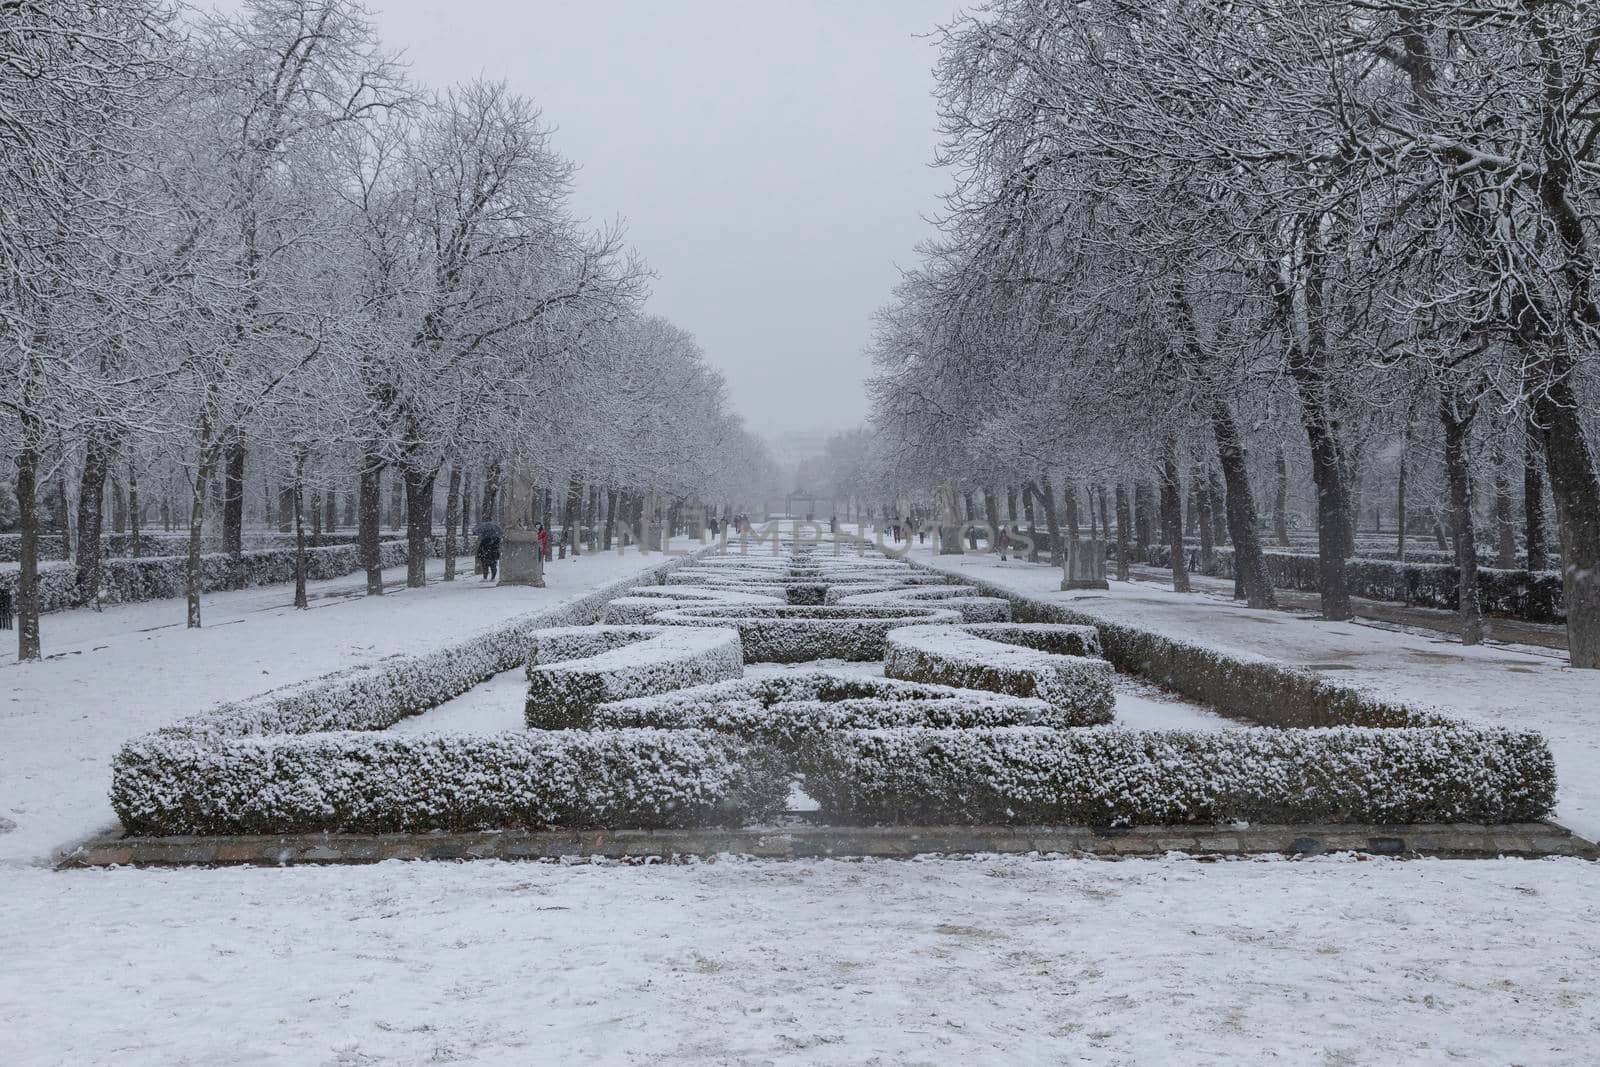 People enjoying a snowy day in the Retiro park, Madrid. by alvarobueno